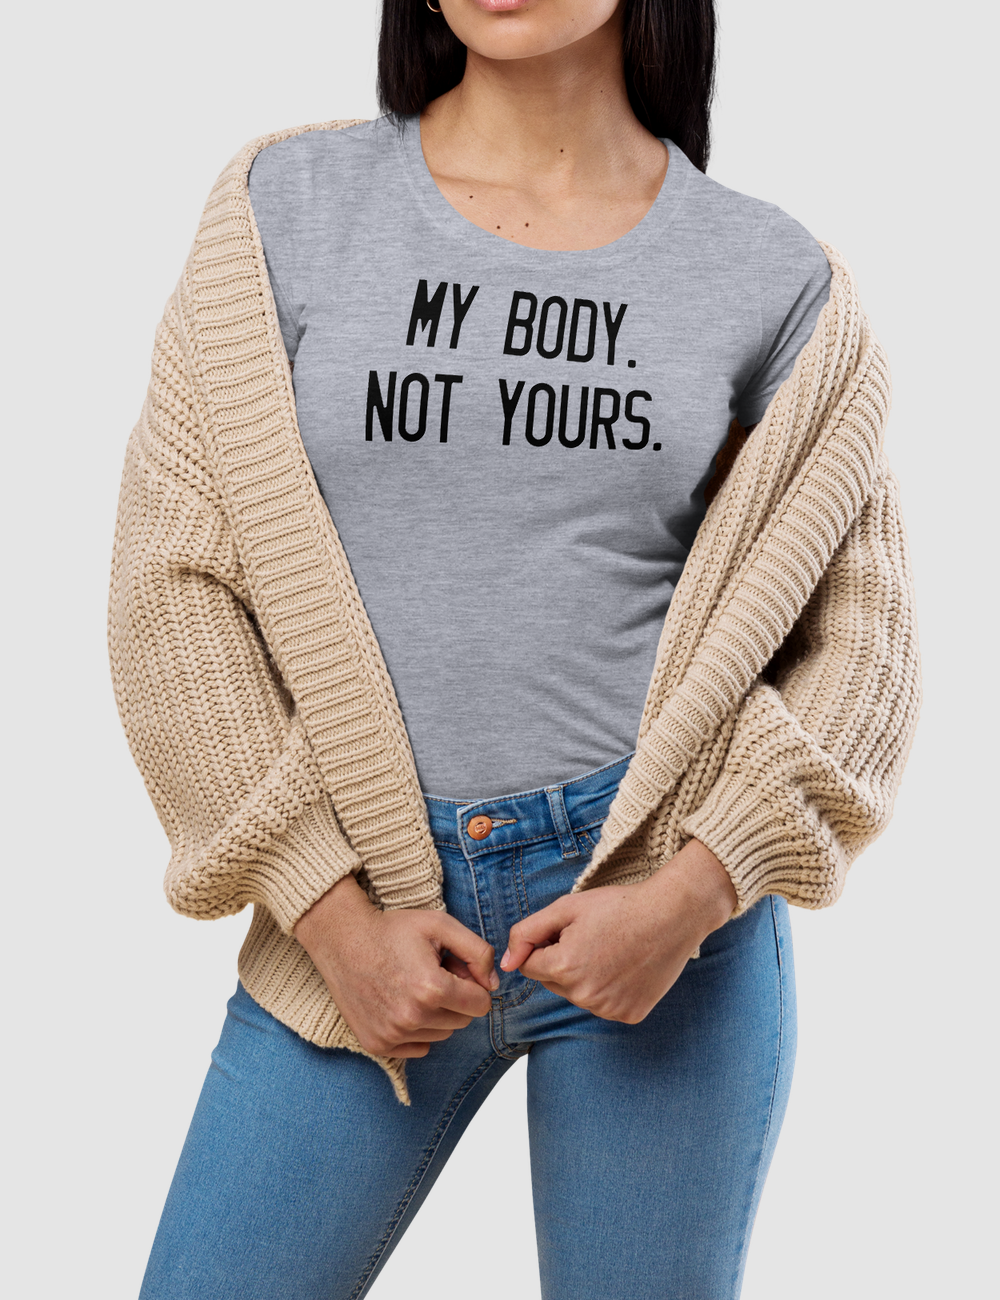 My Body Not Yours | Women's Fitted T-Shirt OniTakai